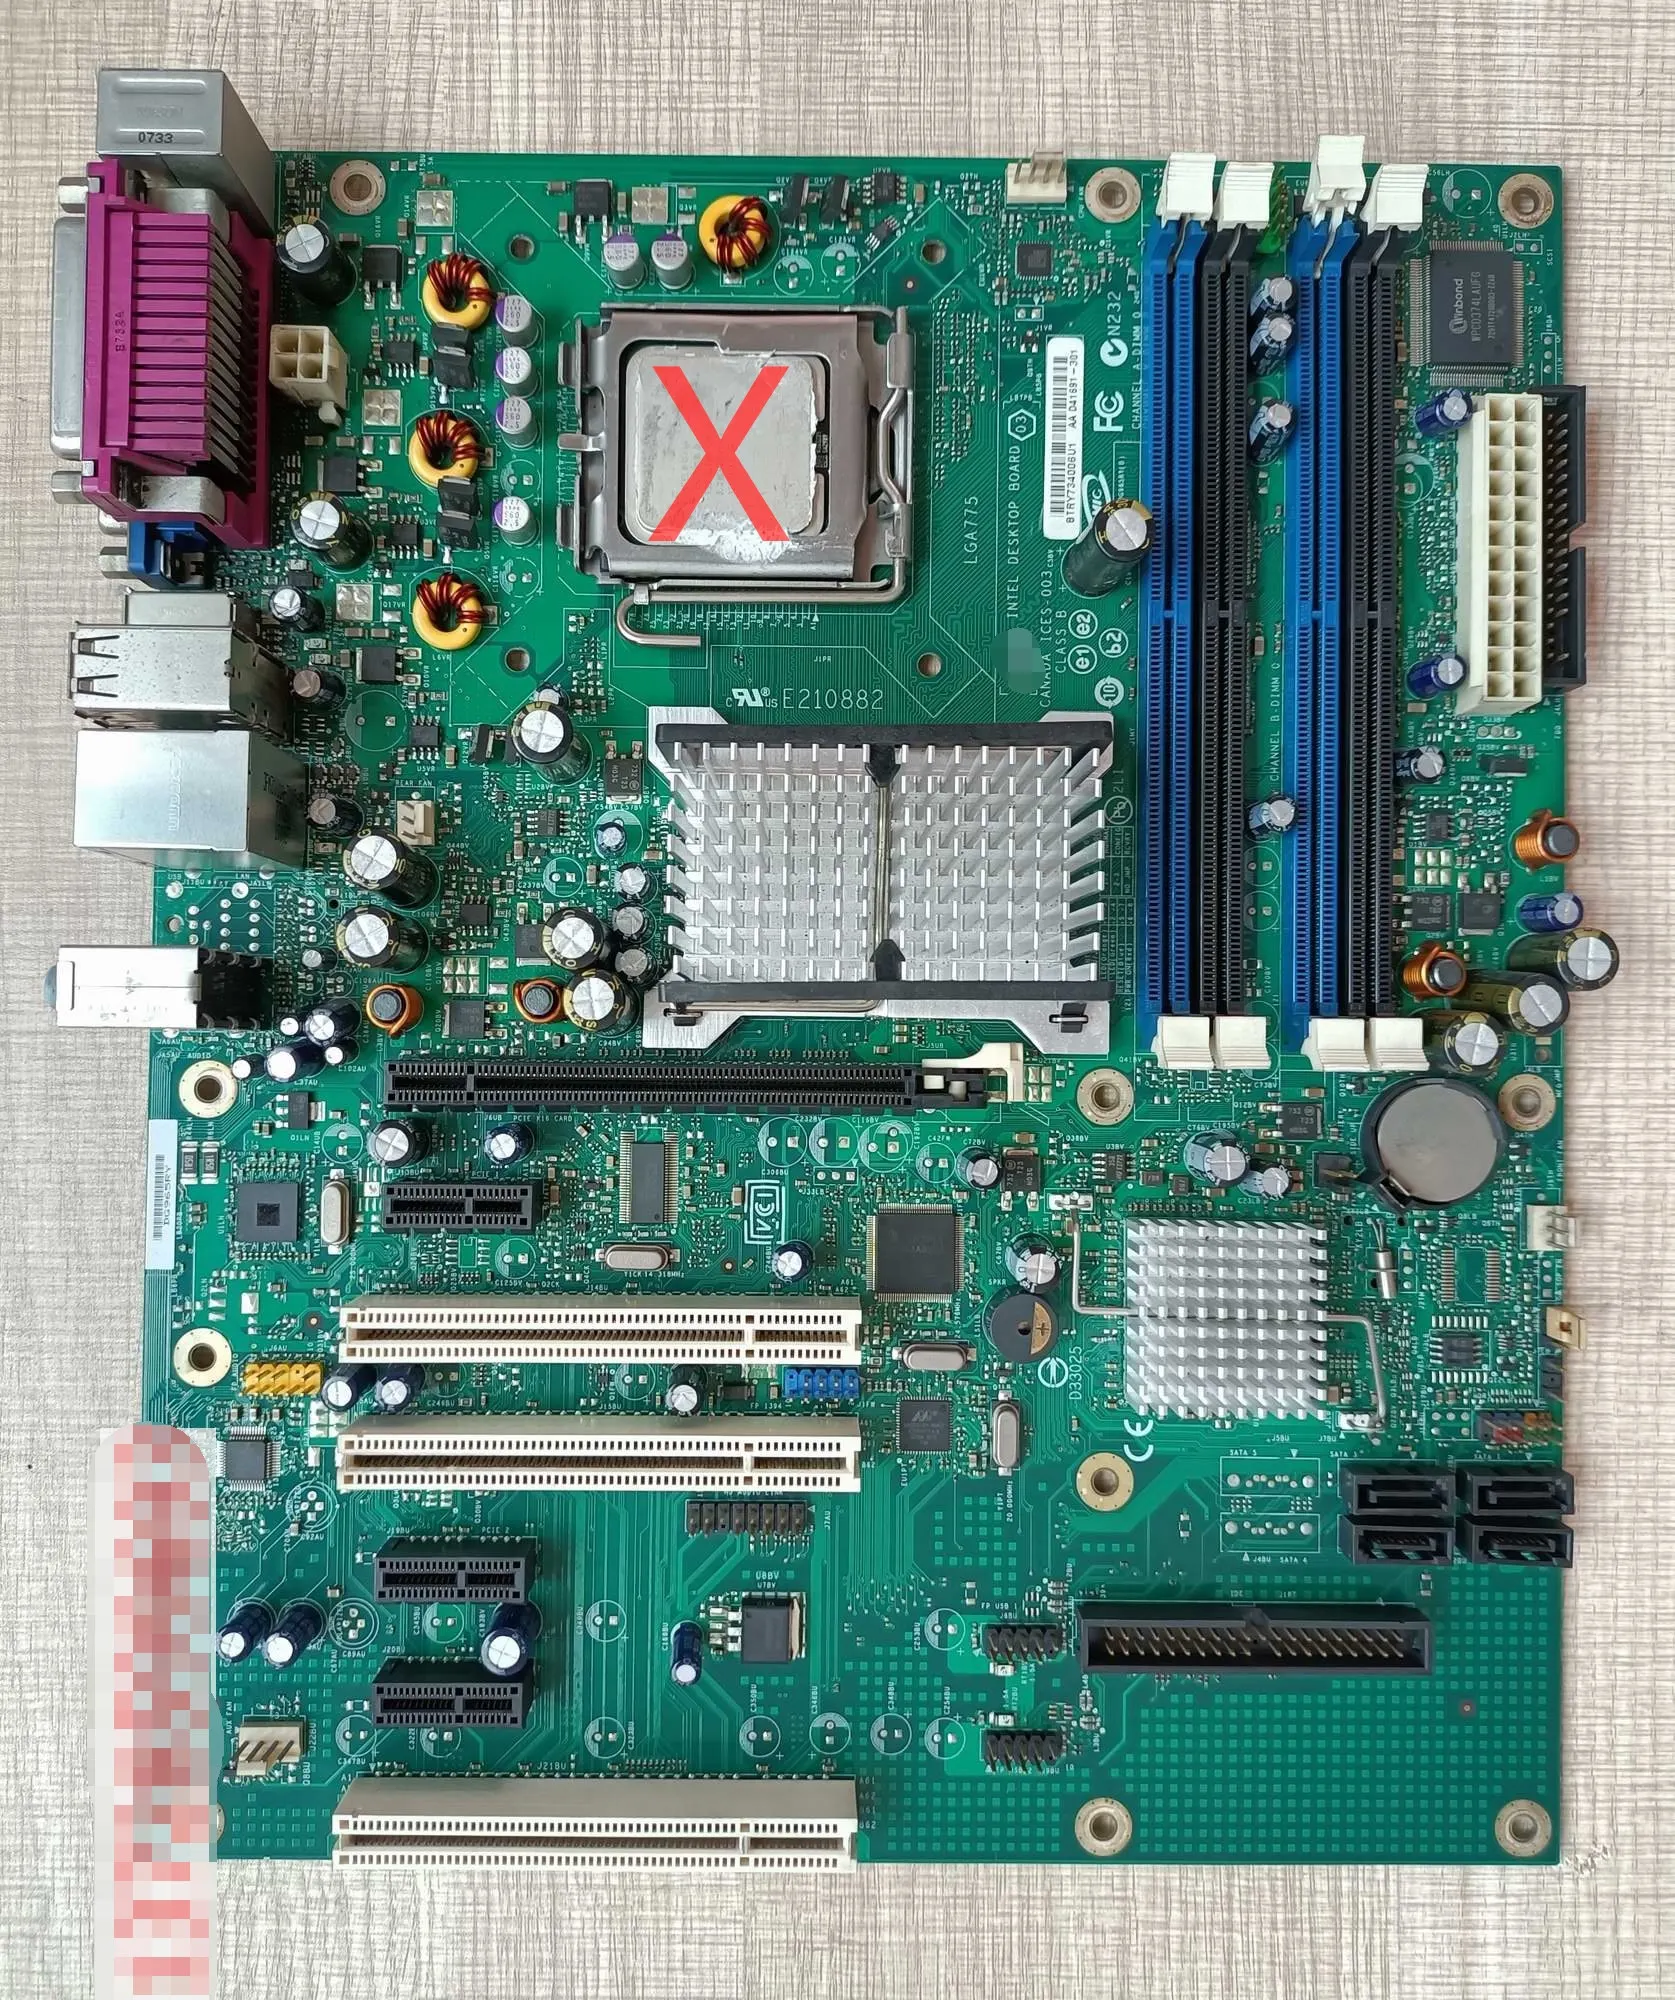 Dg965ry For Intel Desktop Board Industrial Motherboard Lga775 - Motherboards  - AliExpress